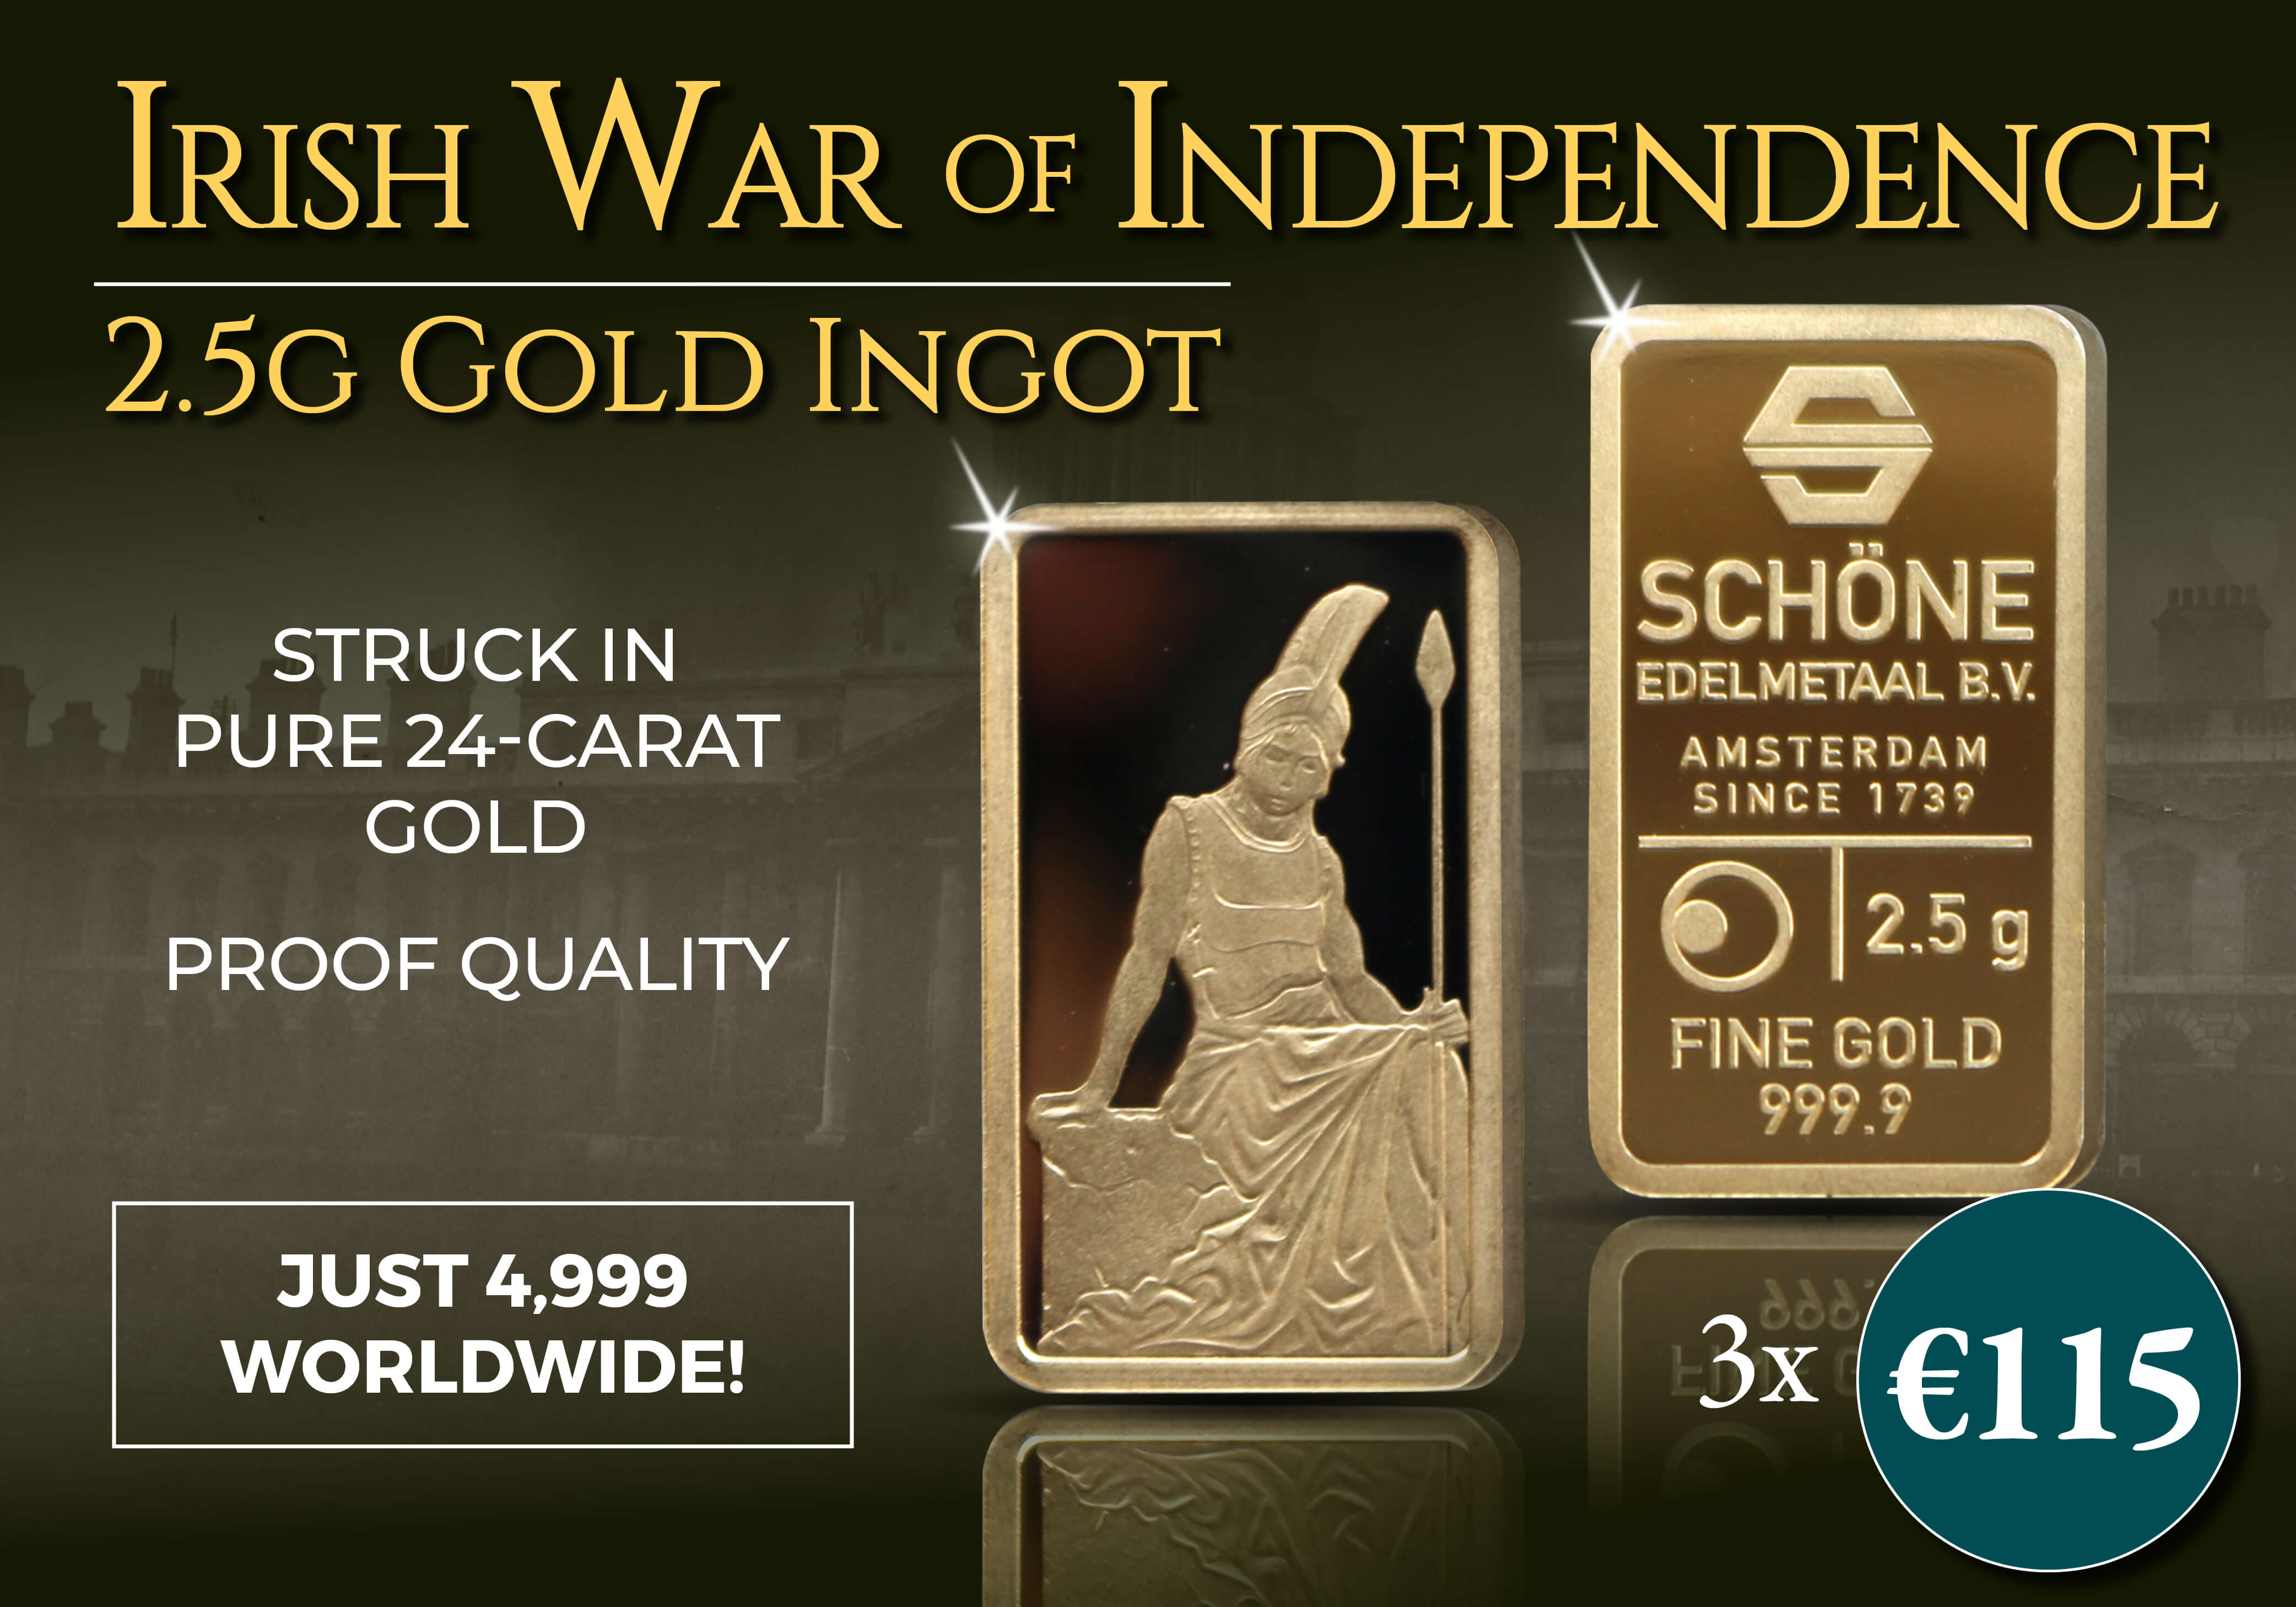 The Irish War of Independence Pure 24-carat Gold Ingot